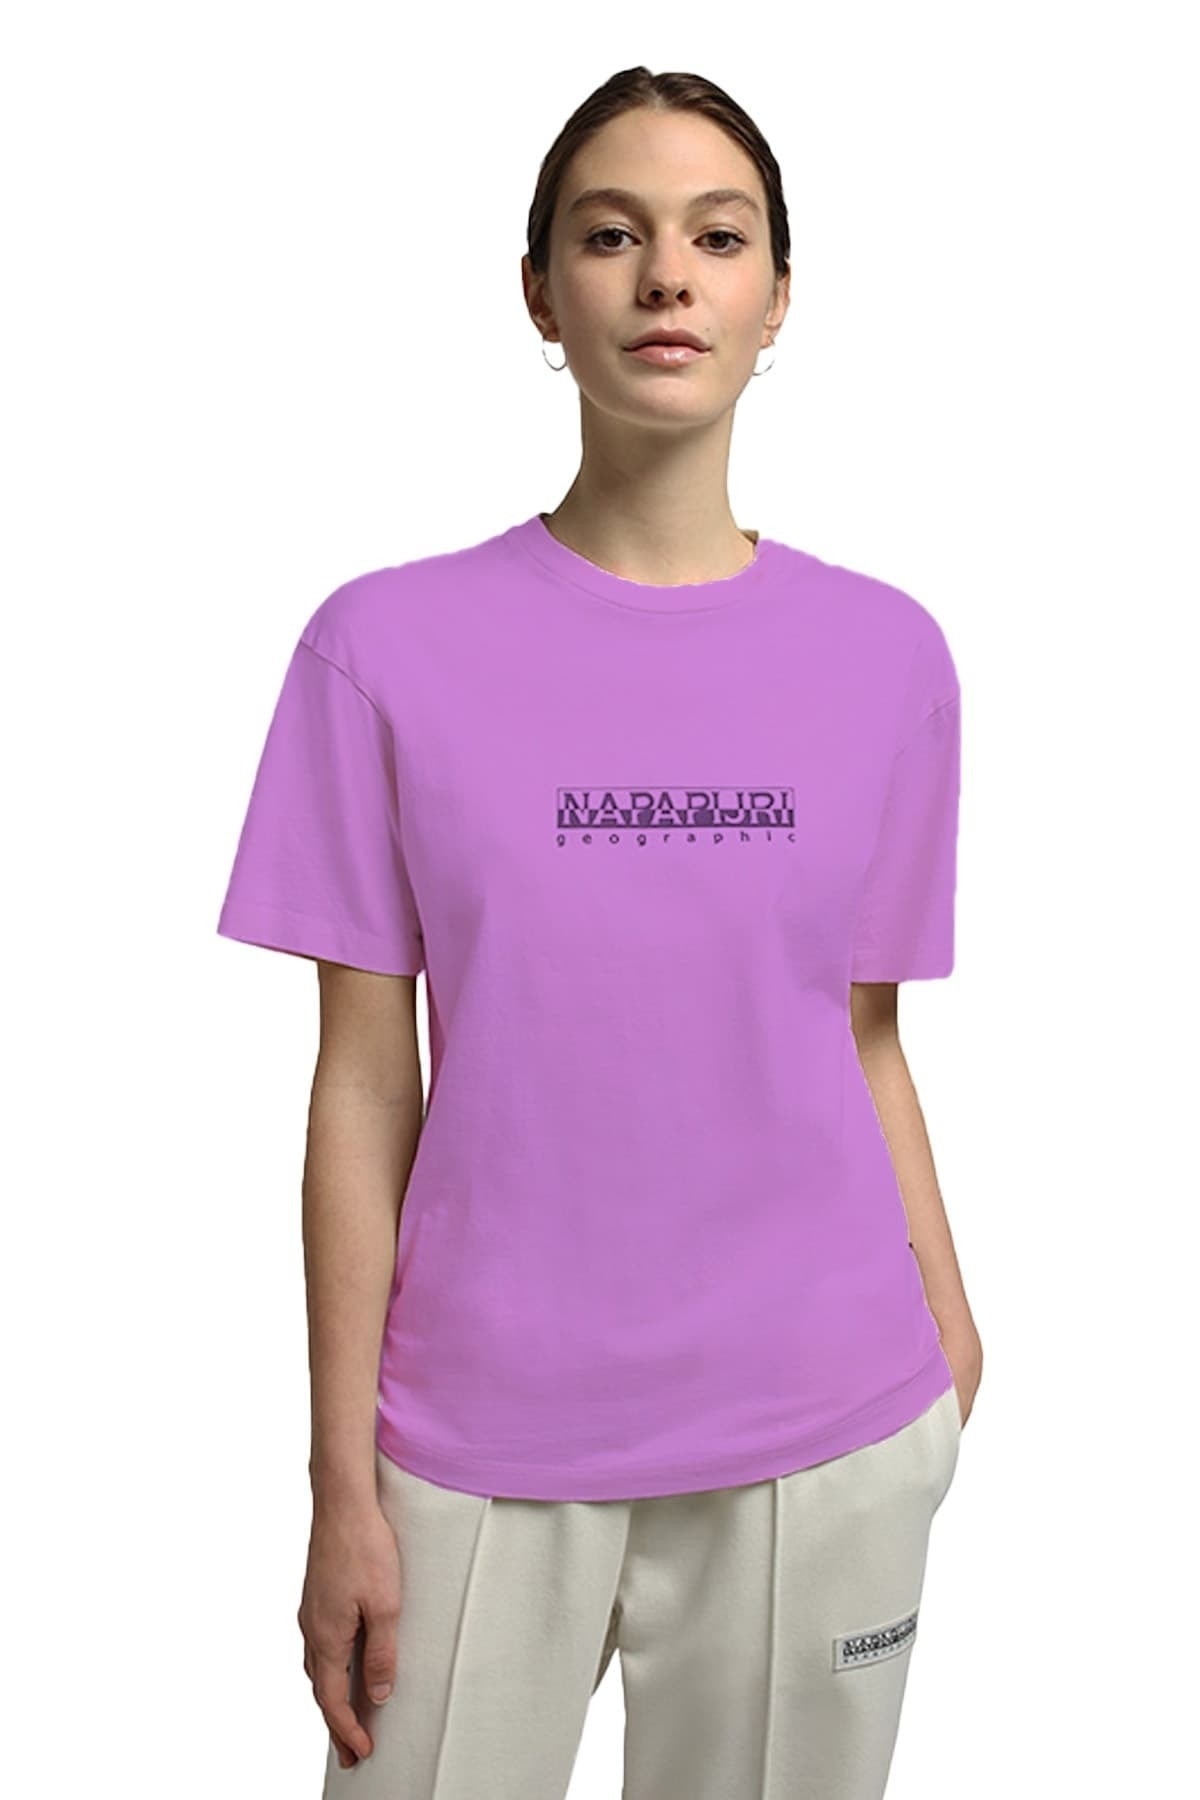 Napapijri S-box W Ss 4 Kadın T-shirt - Np0a4gdd